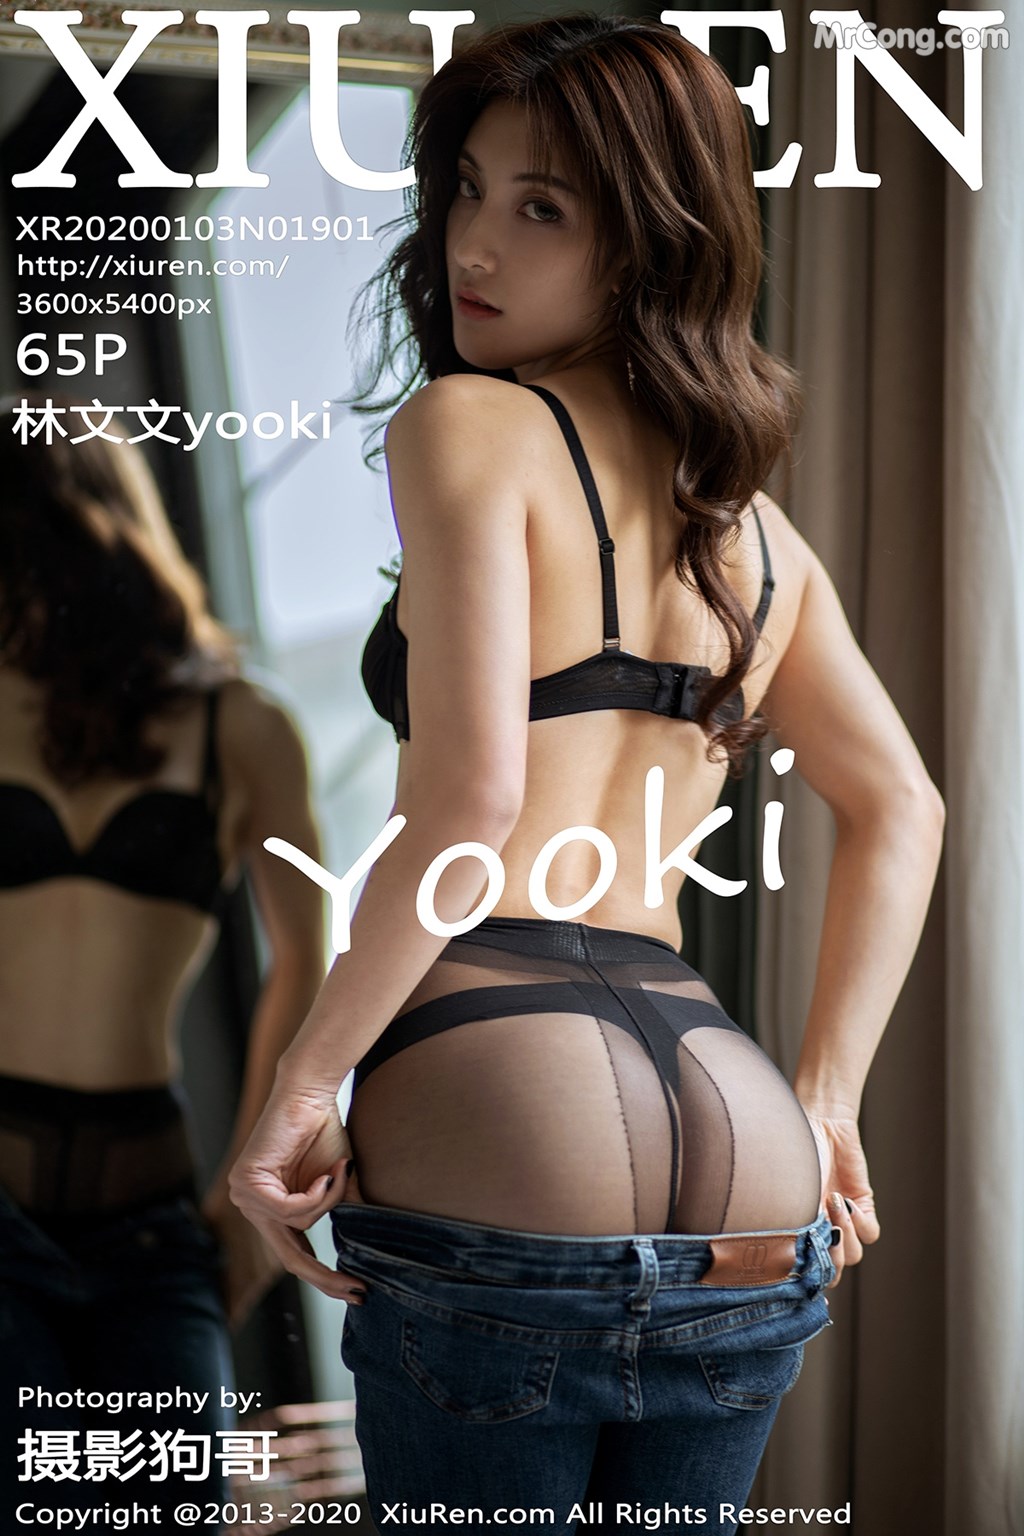 [XIUREN] No.1901 林文文yooki Cover Photo